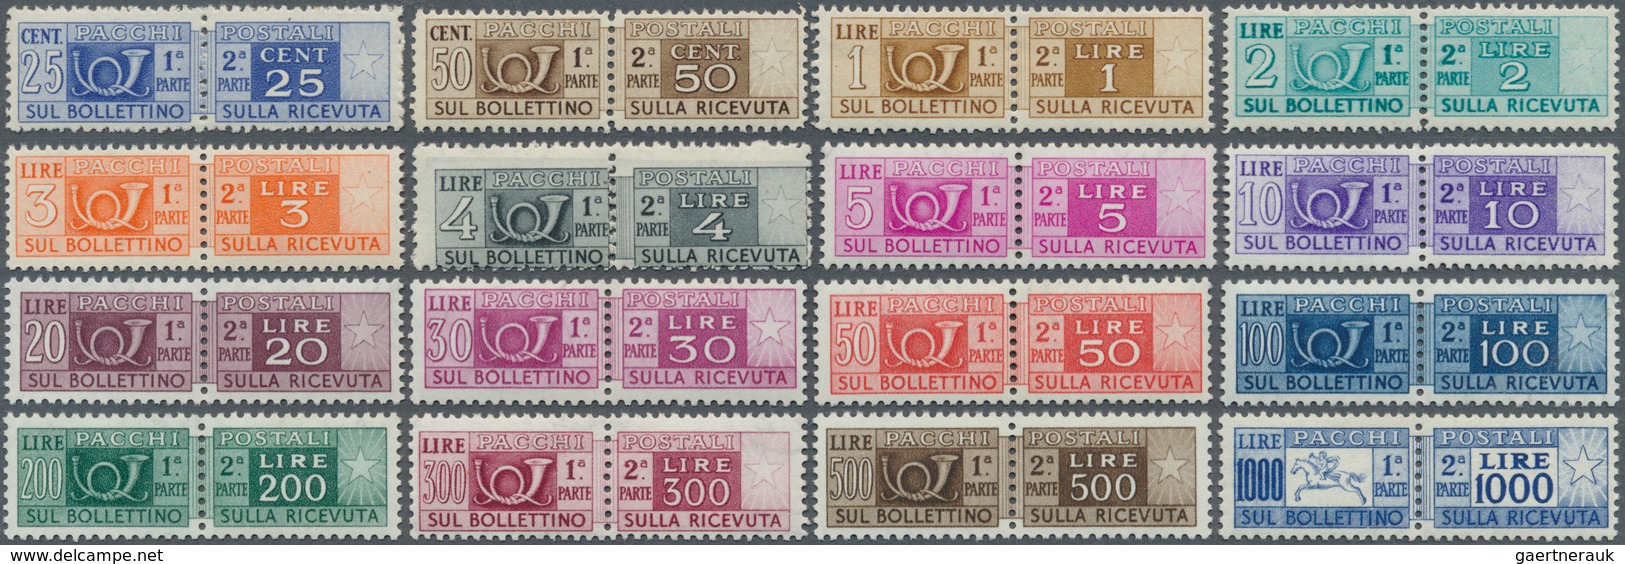 01003 Italien - Paketmarken: 1946/1954, "Post Horn/Cavallino/Cypher" Wm. "Winged Wheel", 25c. To 1000l. Co - Pacchi Postali